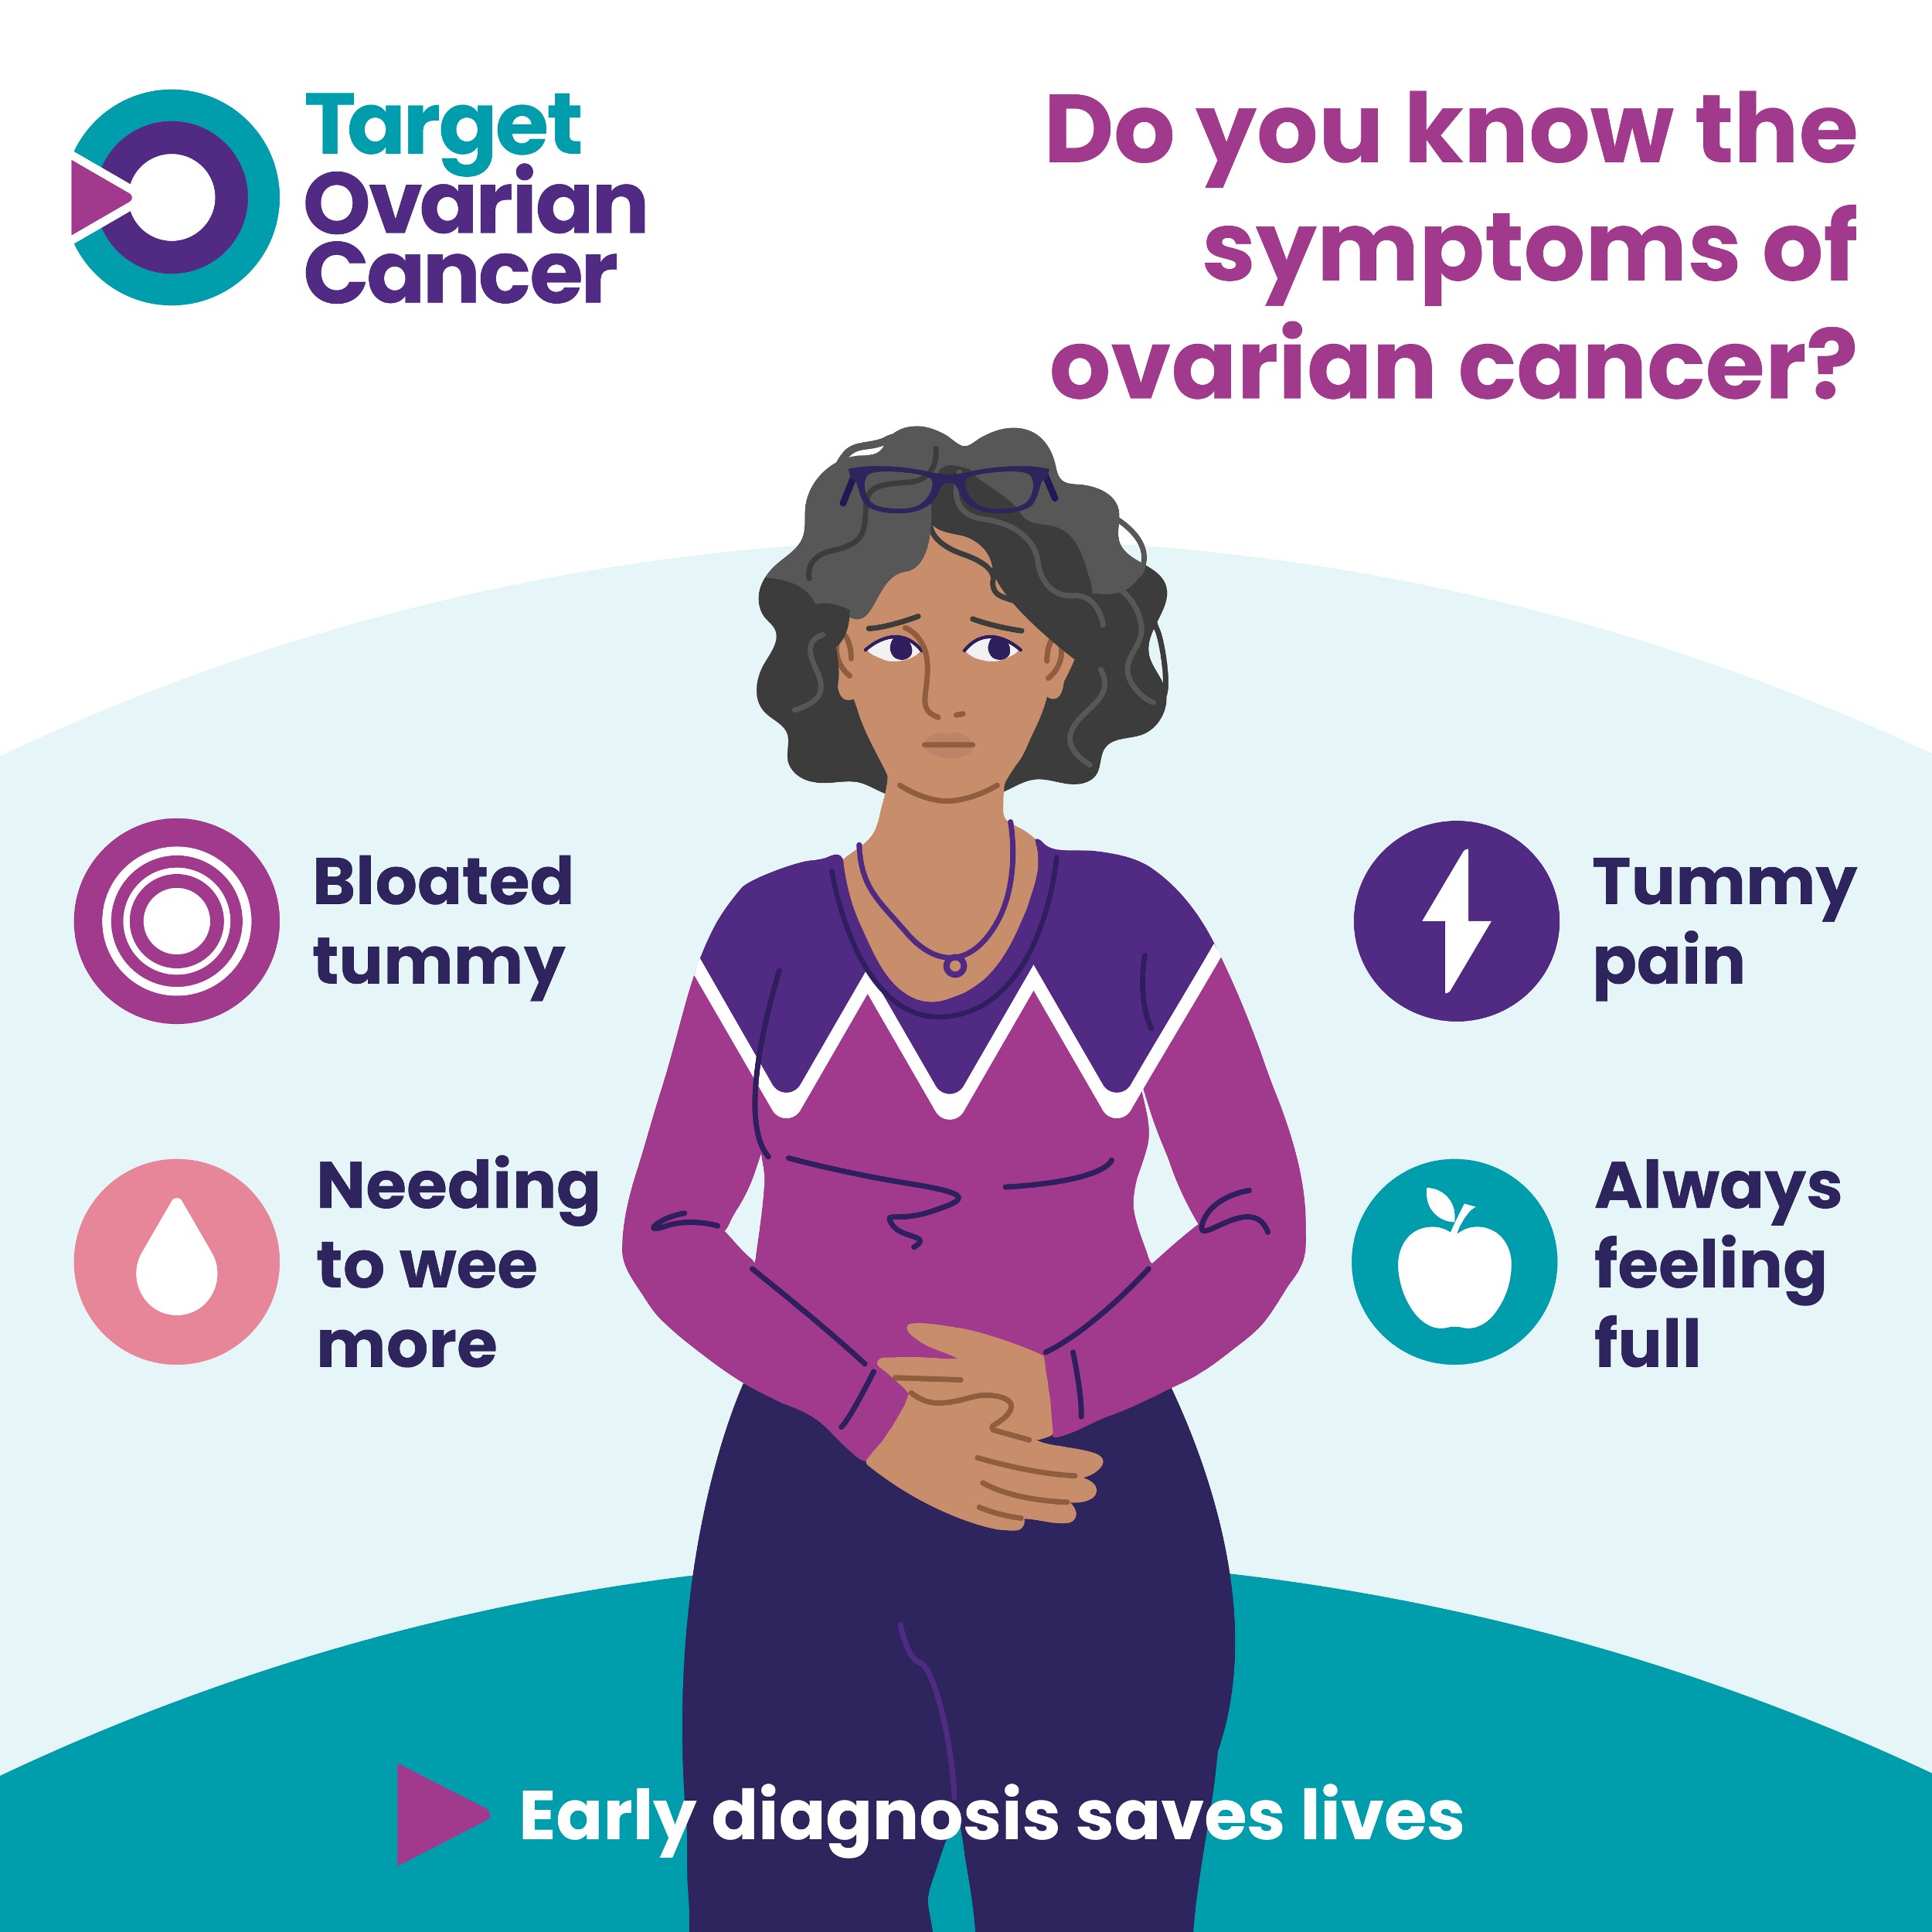 Target Ovarian Cancer_Four main symptoms -  graphic.jpg